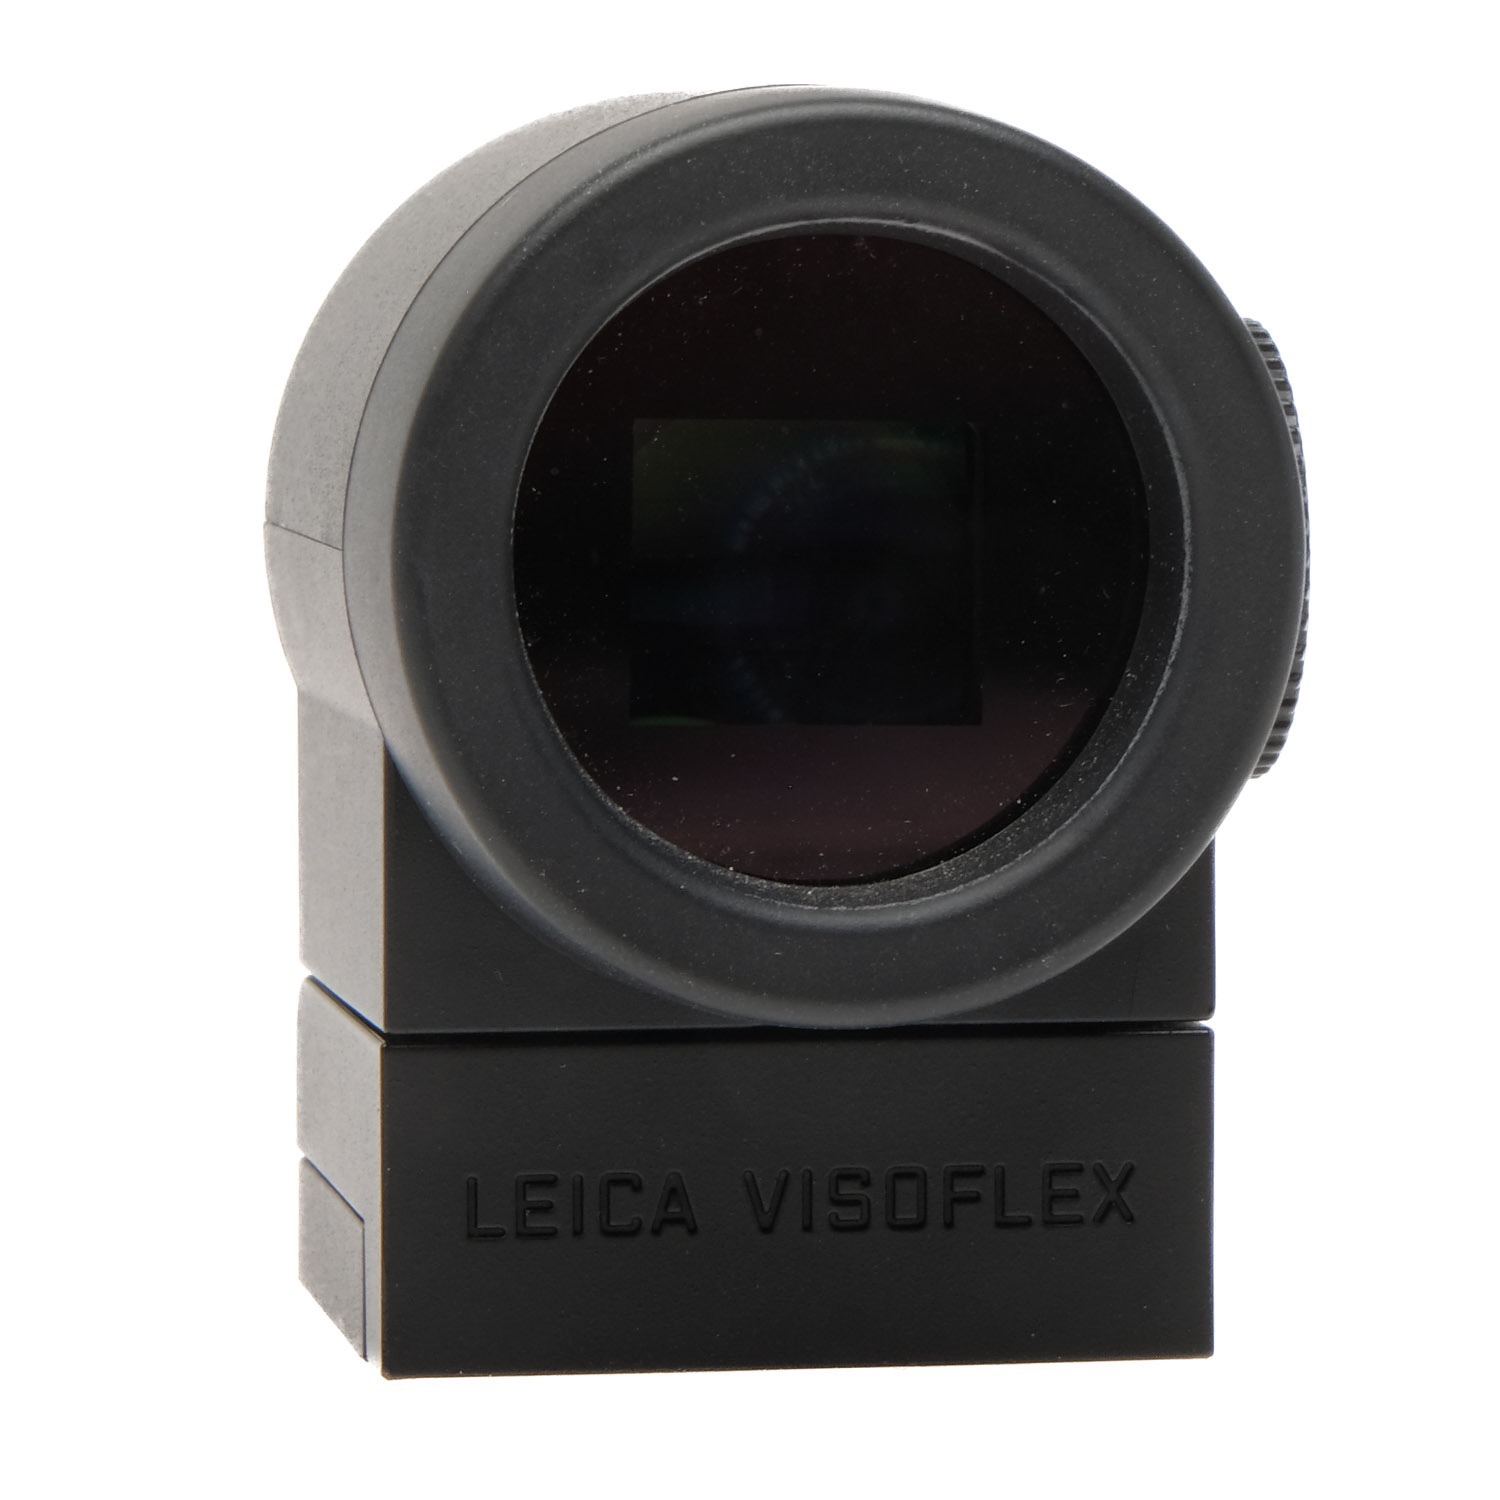 Leica Visoflex 020, Boxed  PA024991